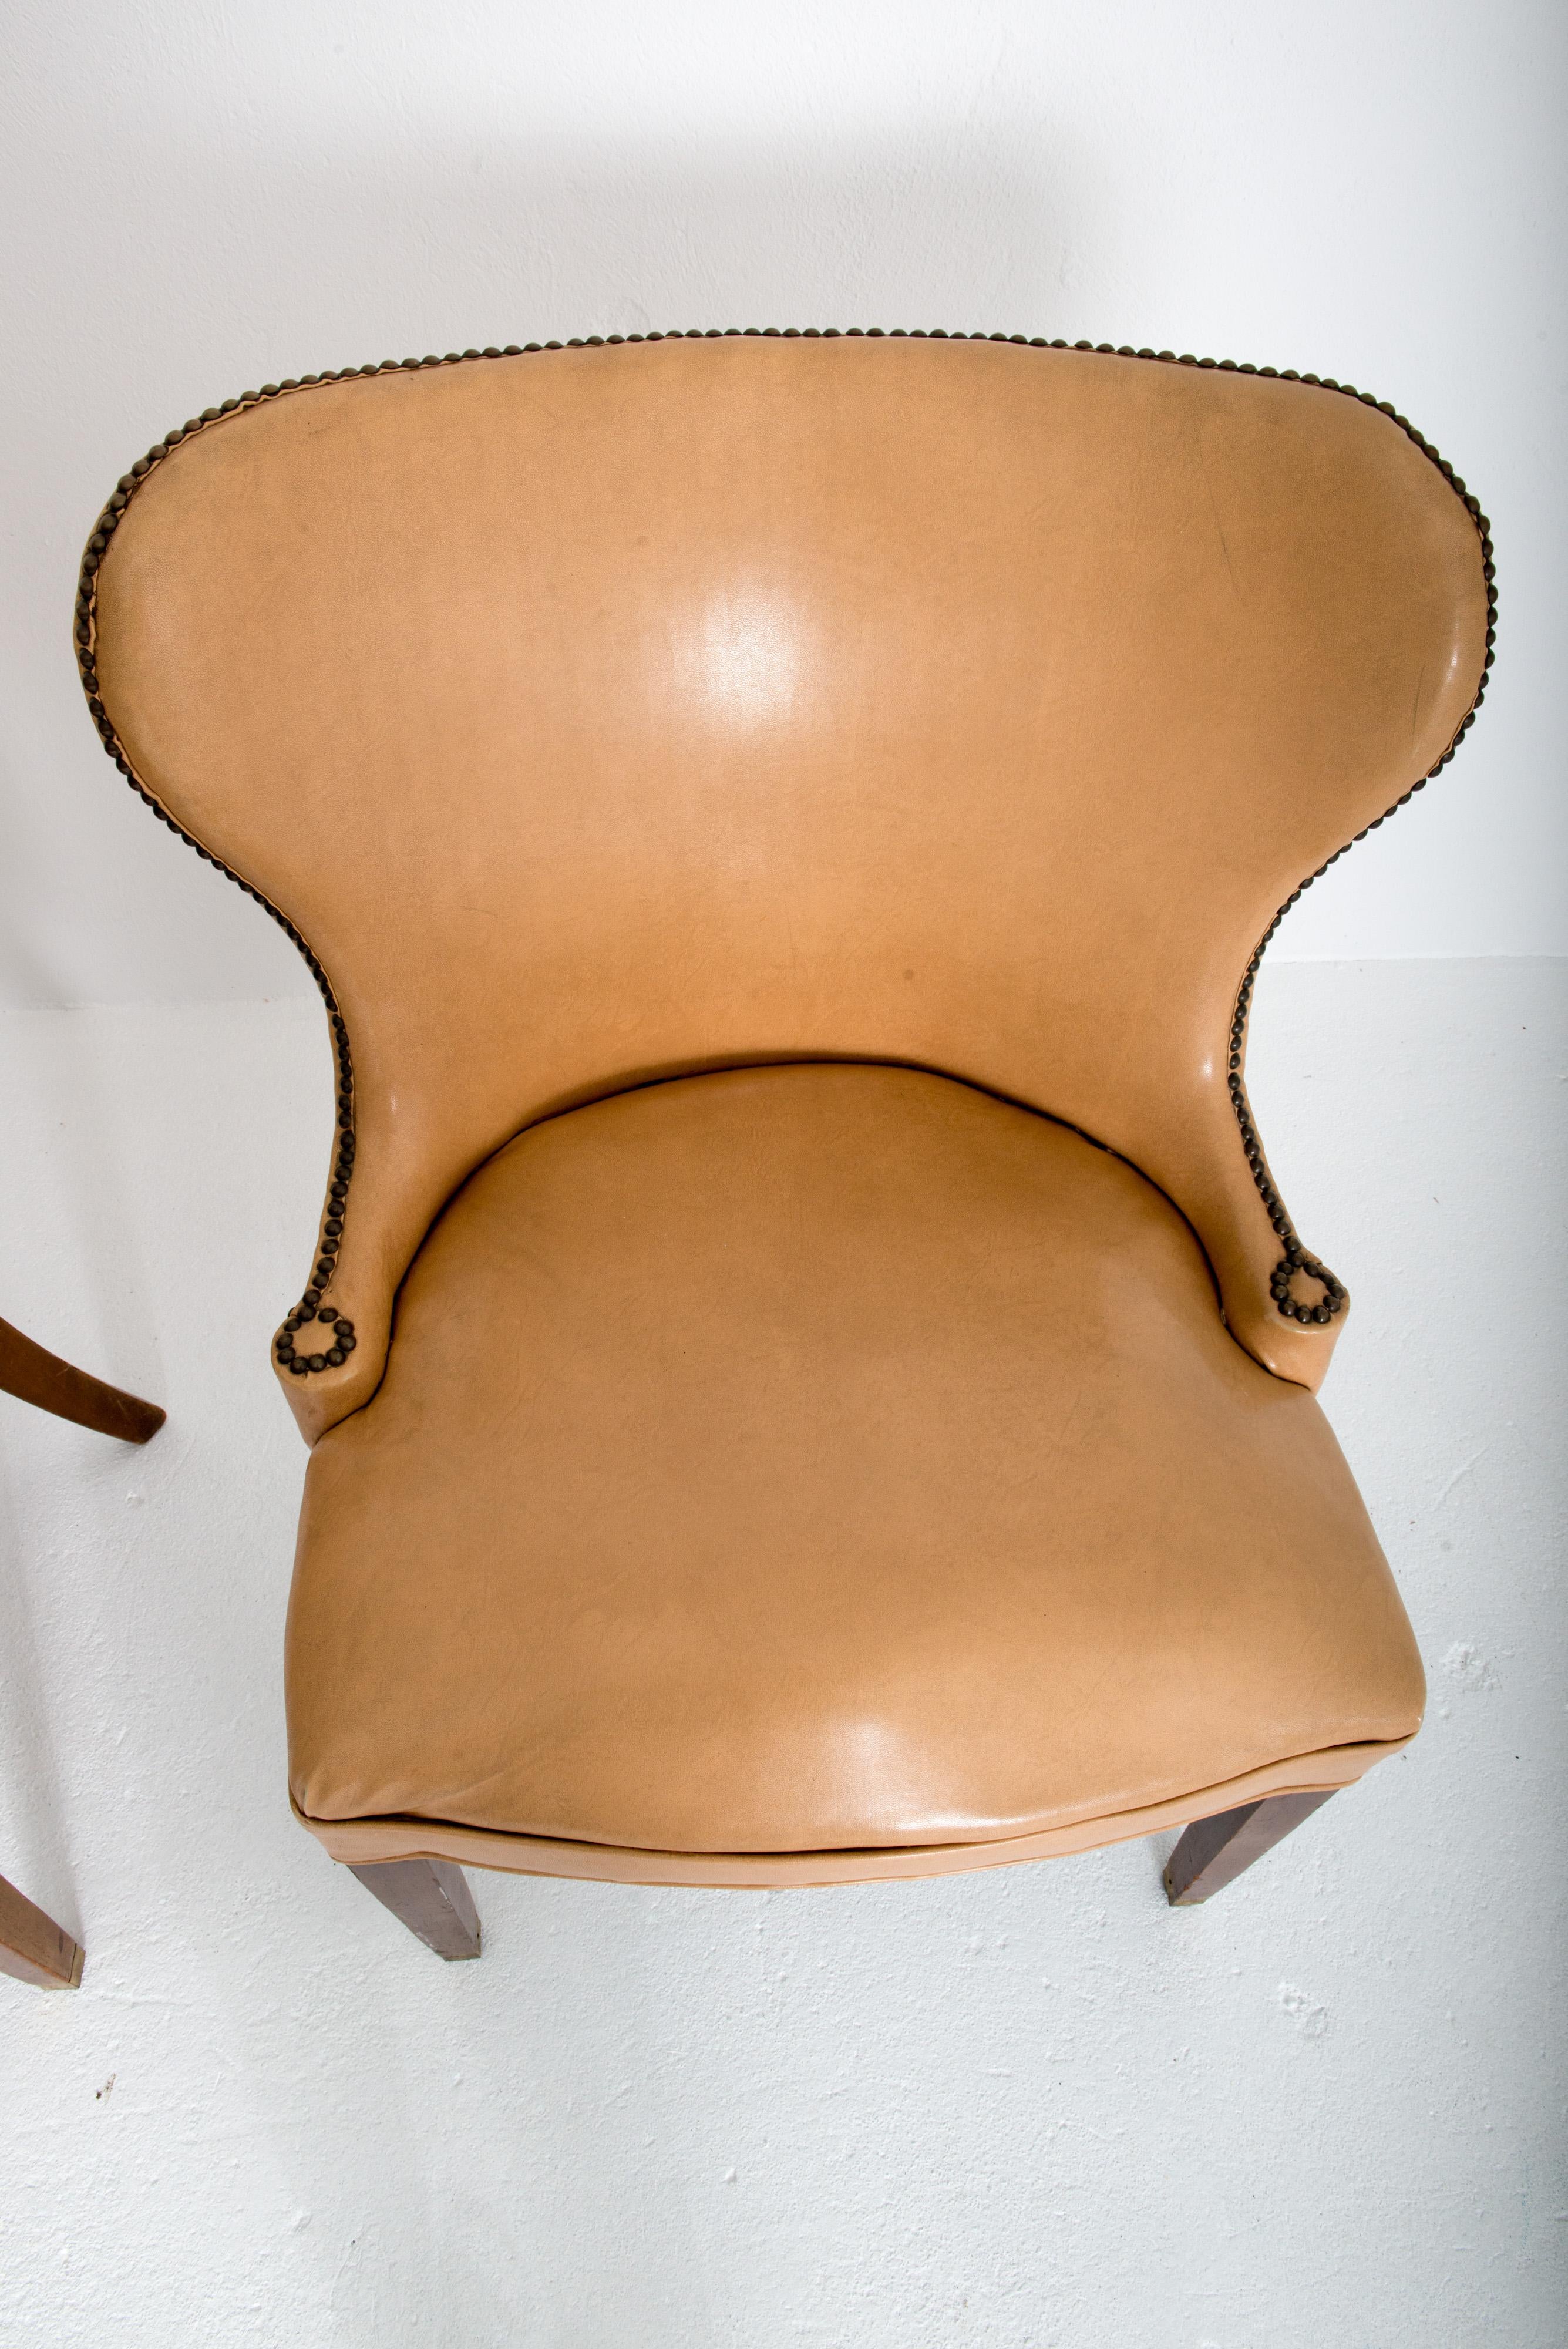 reigen faux leather club chair